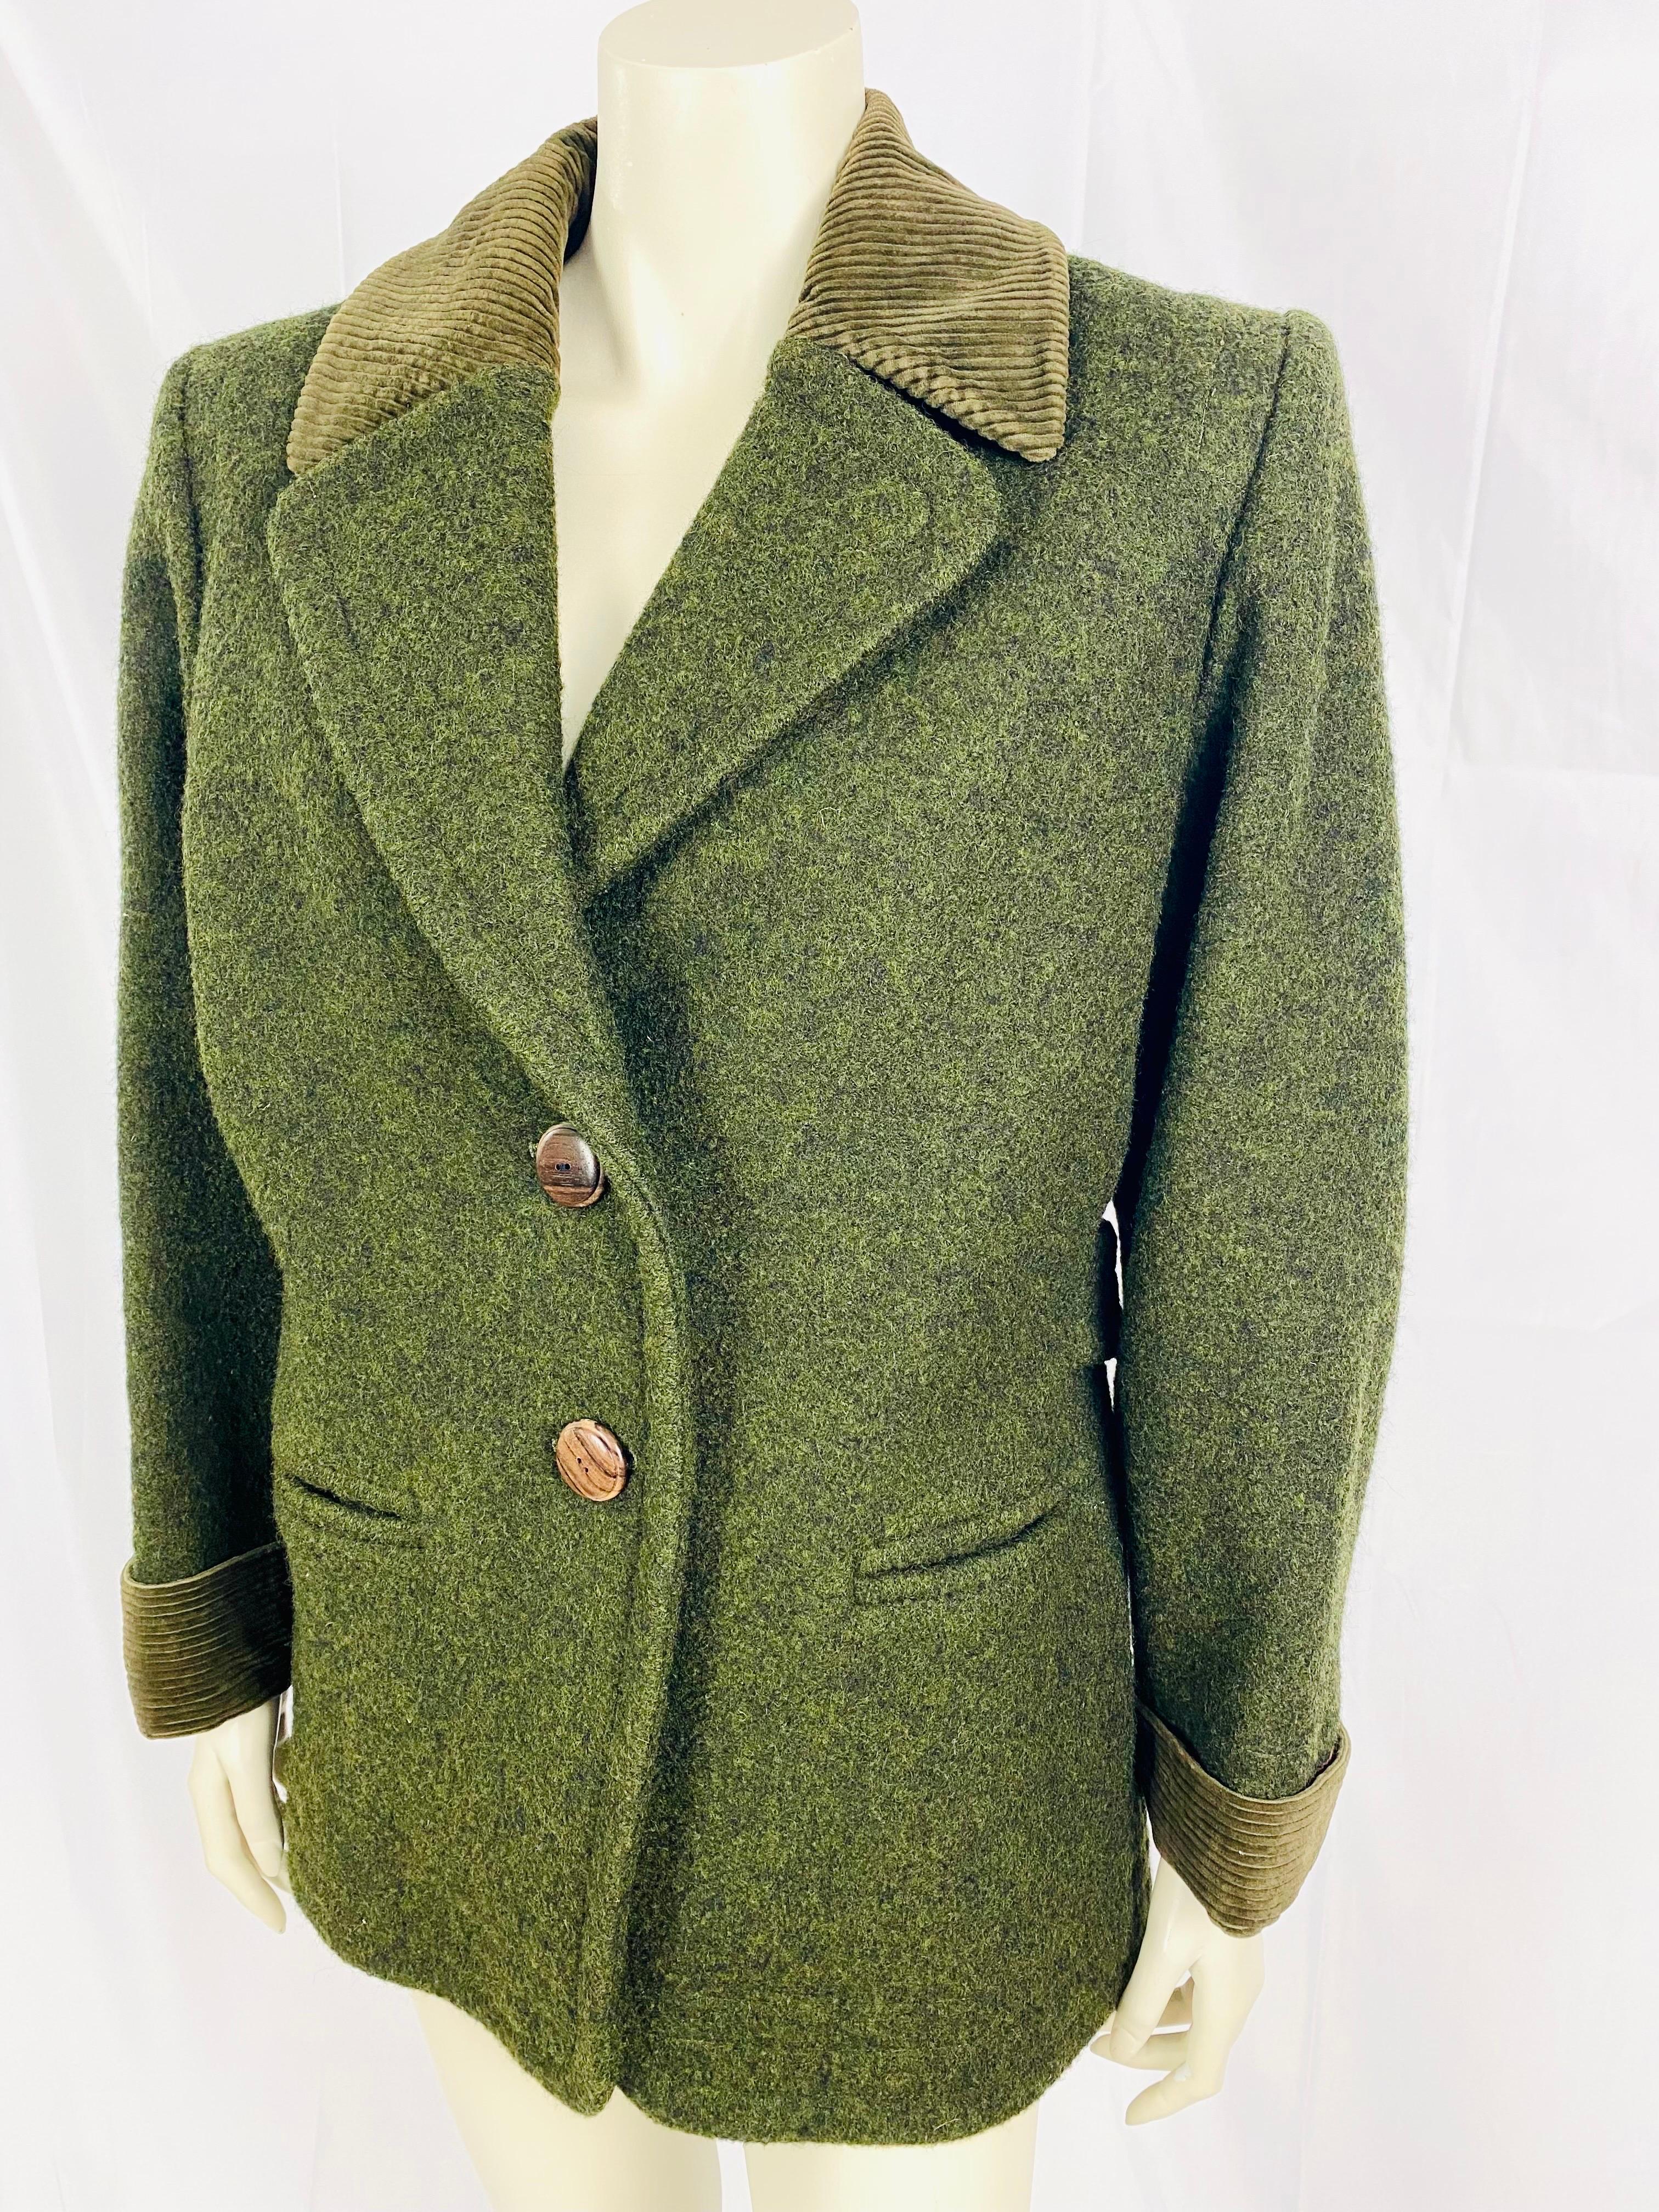 Superb vintage Yves saint laurent winter jacket circa 1970, in khaki boiled wool 6